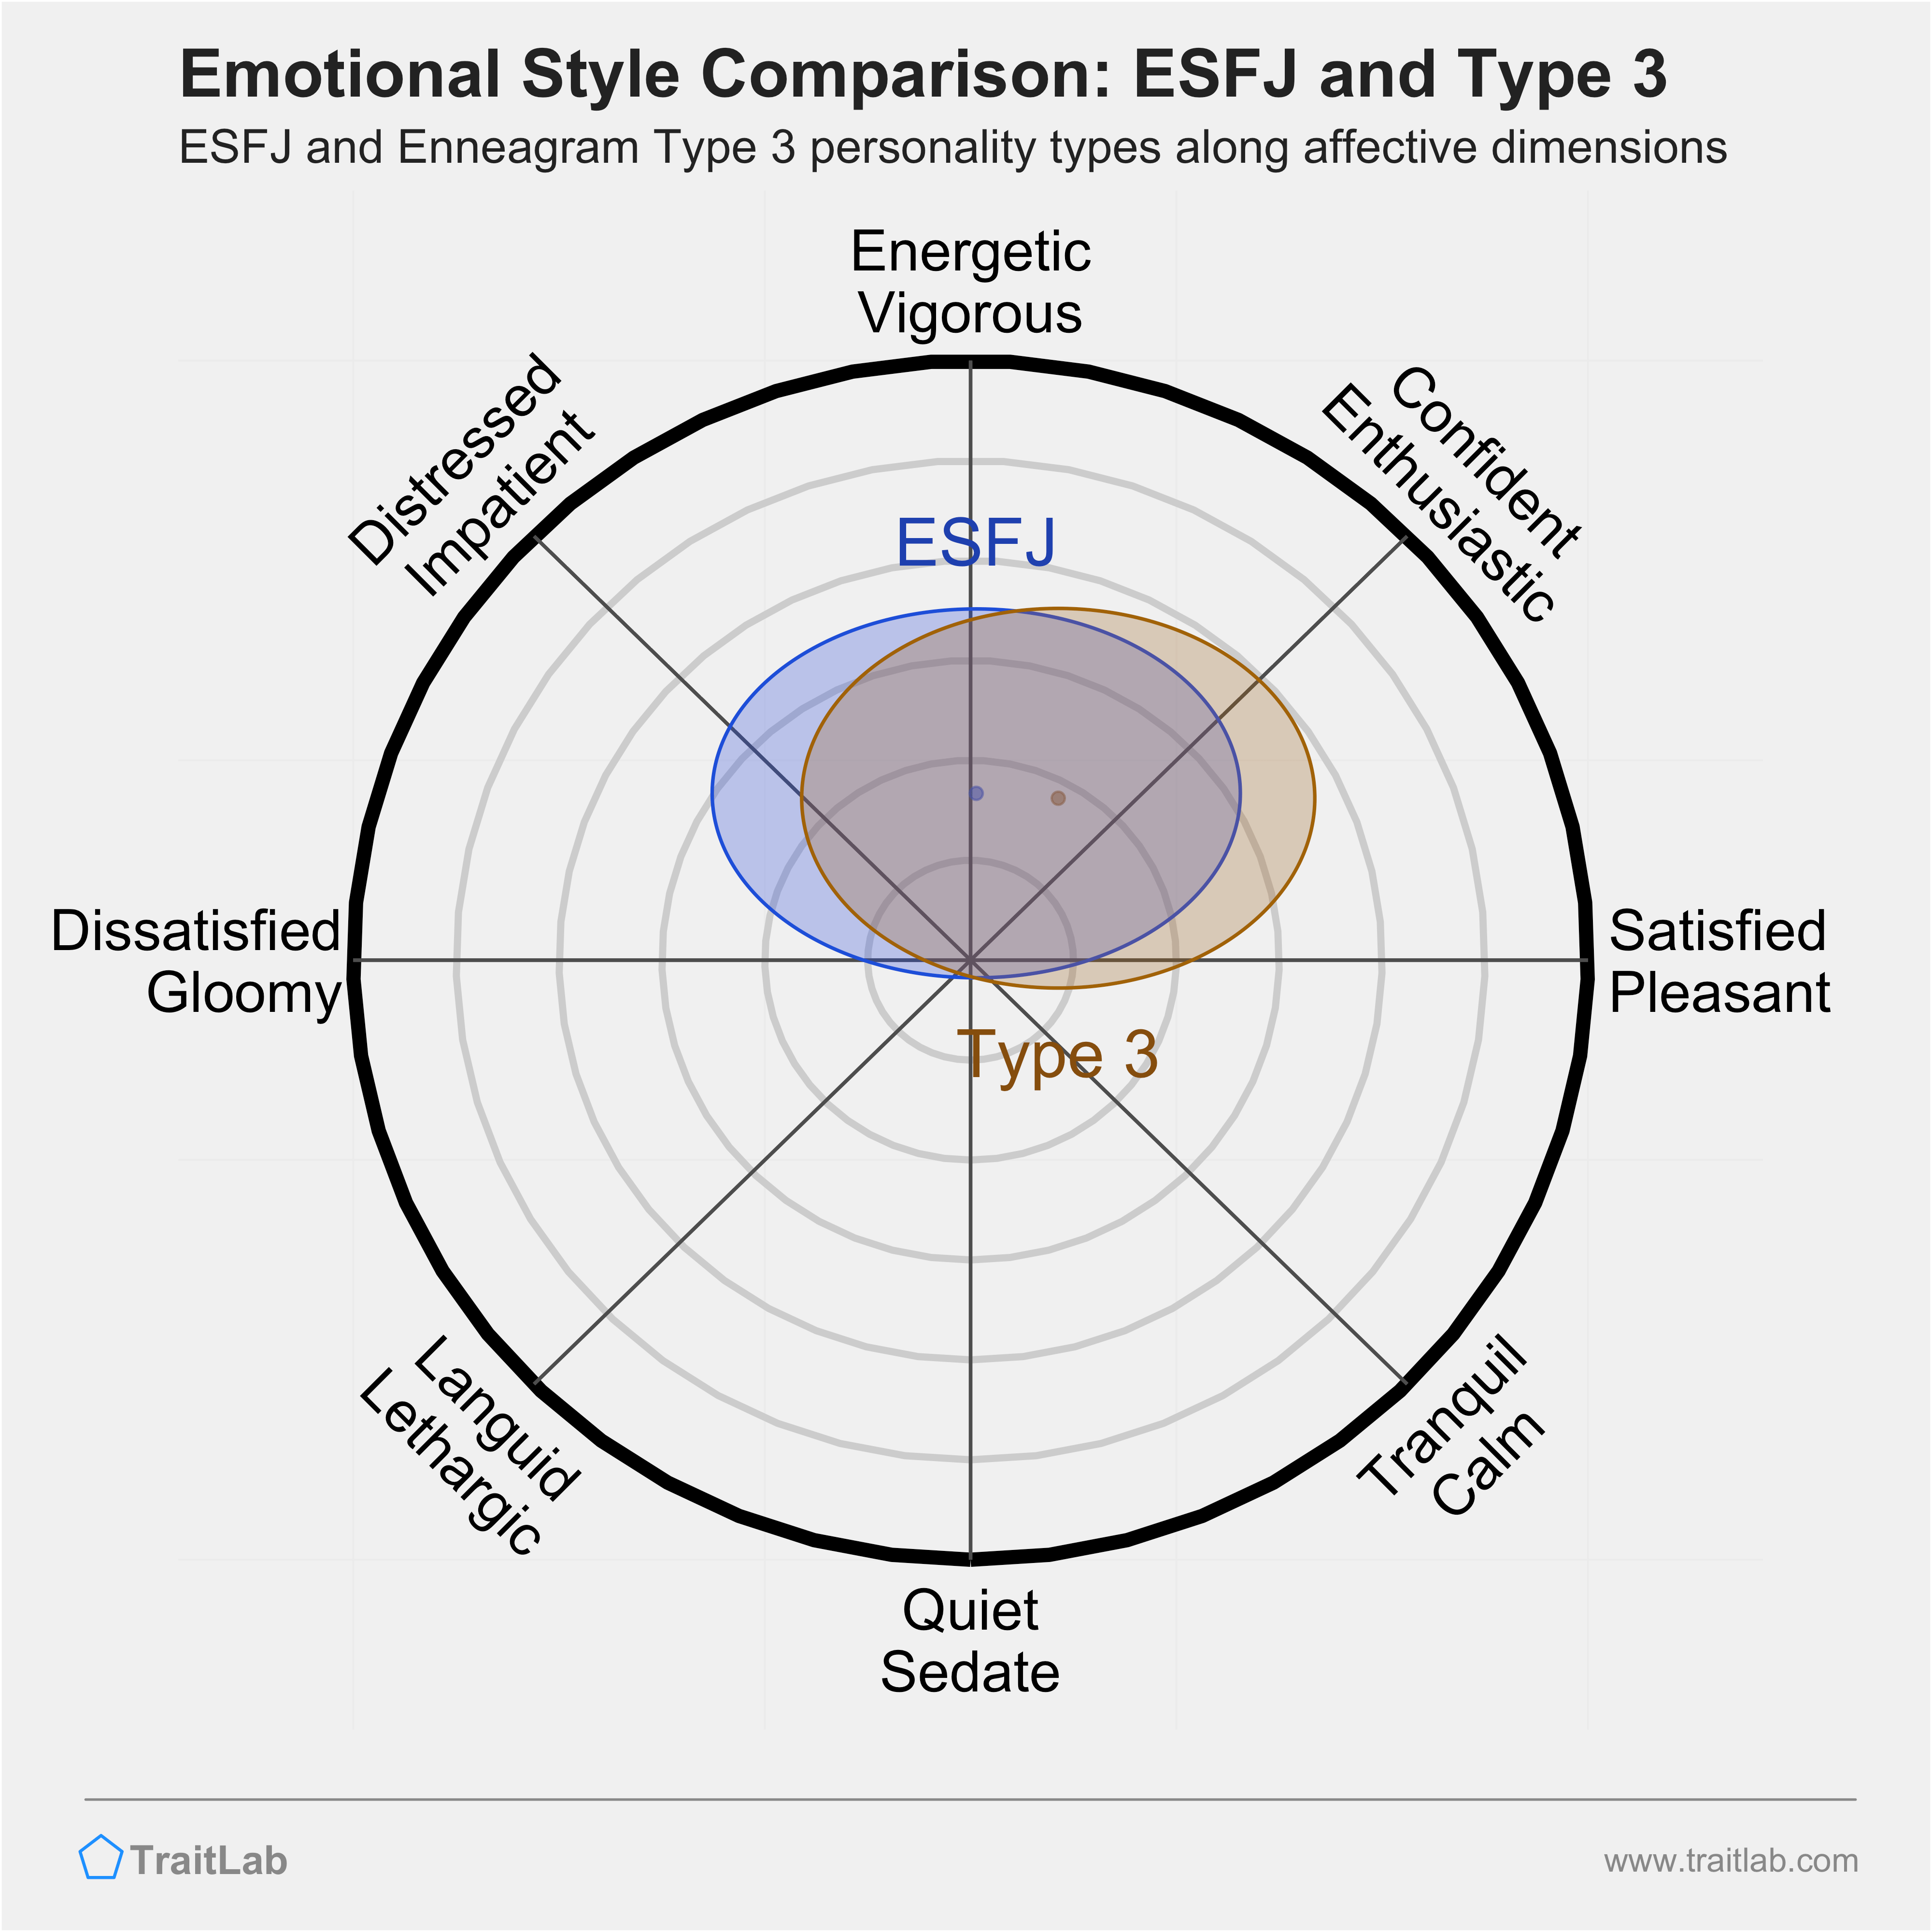 ESFJ and Type 3 comparison across emotional (affective) dimensions